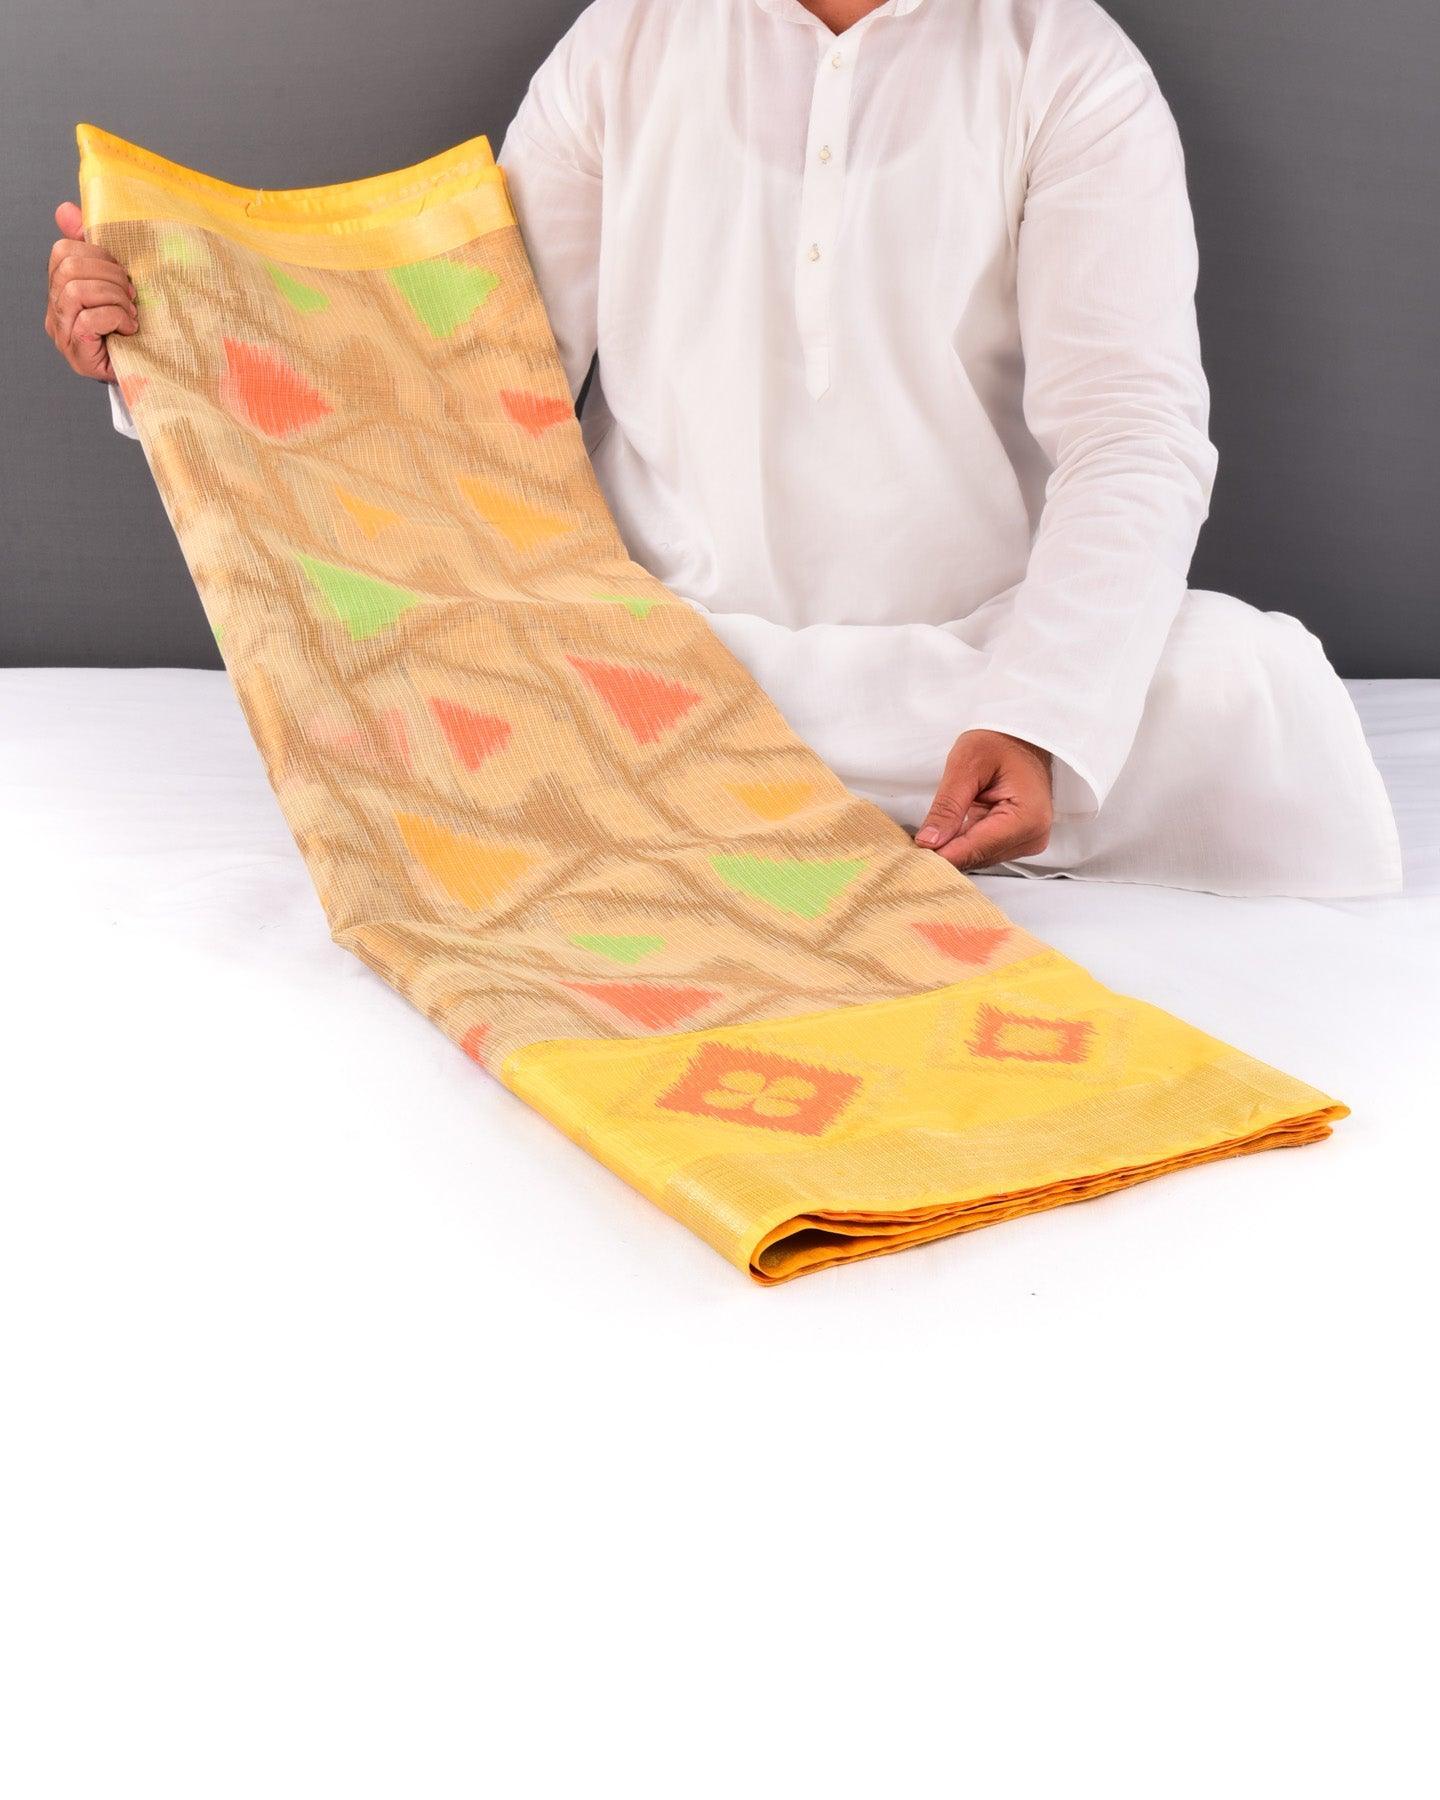 Beige Banarasi Kota Check Arrowhead Buta Cutwork Brocade Woven Blended Cotton Silk Saree with Contrast Yellow Border Pallu - By HolyWeaves, Benares